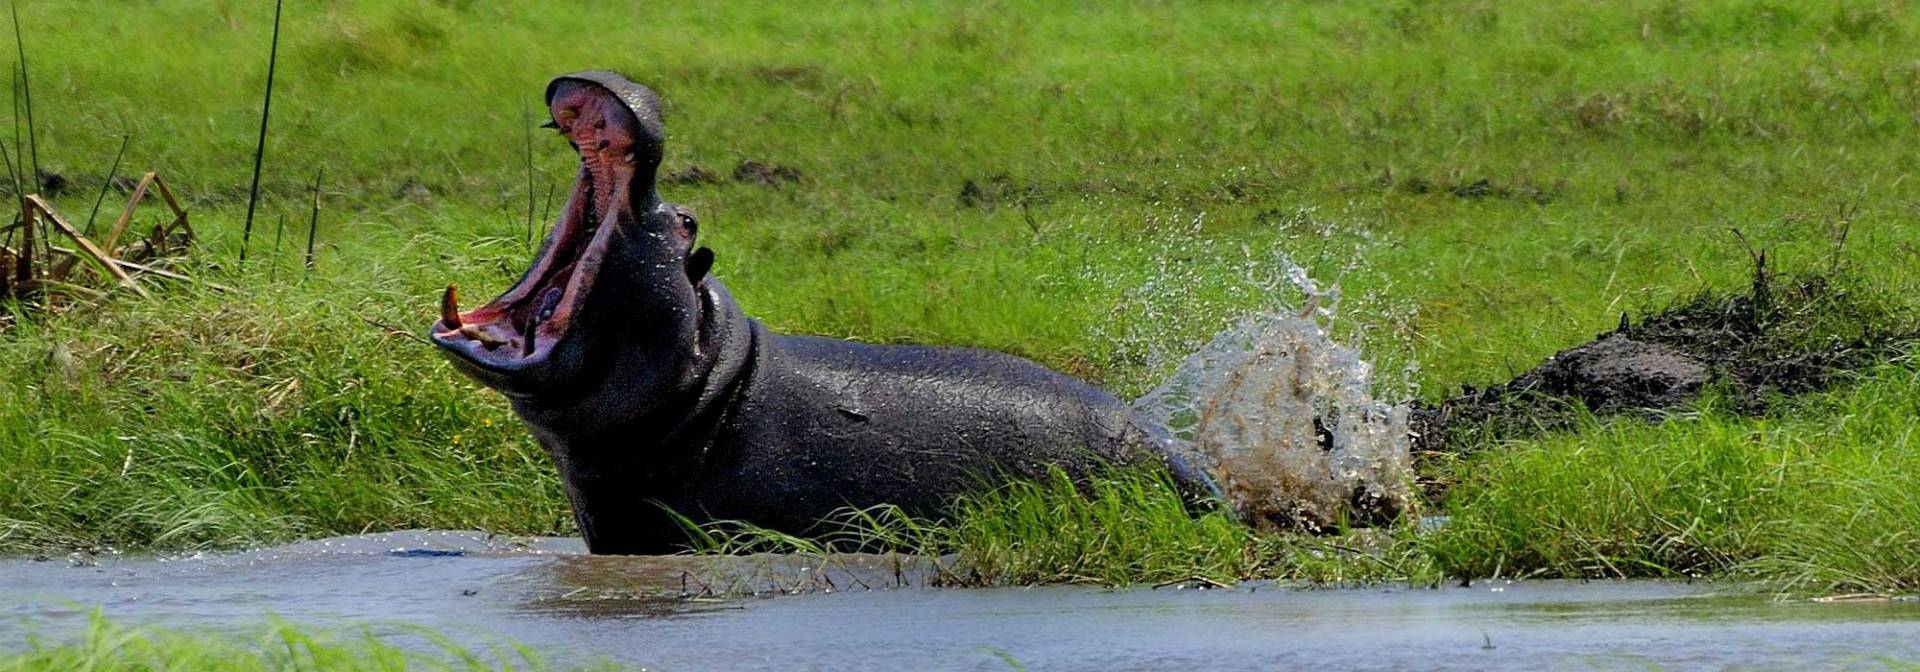 Hippo in Angriffsstellung